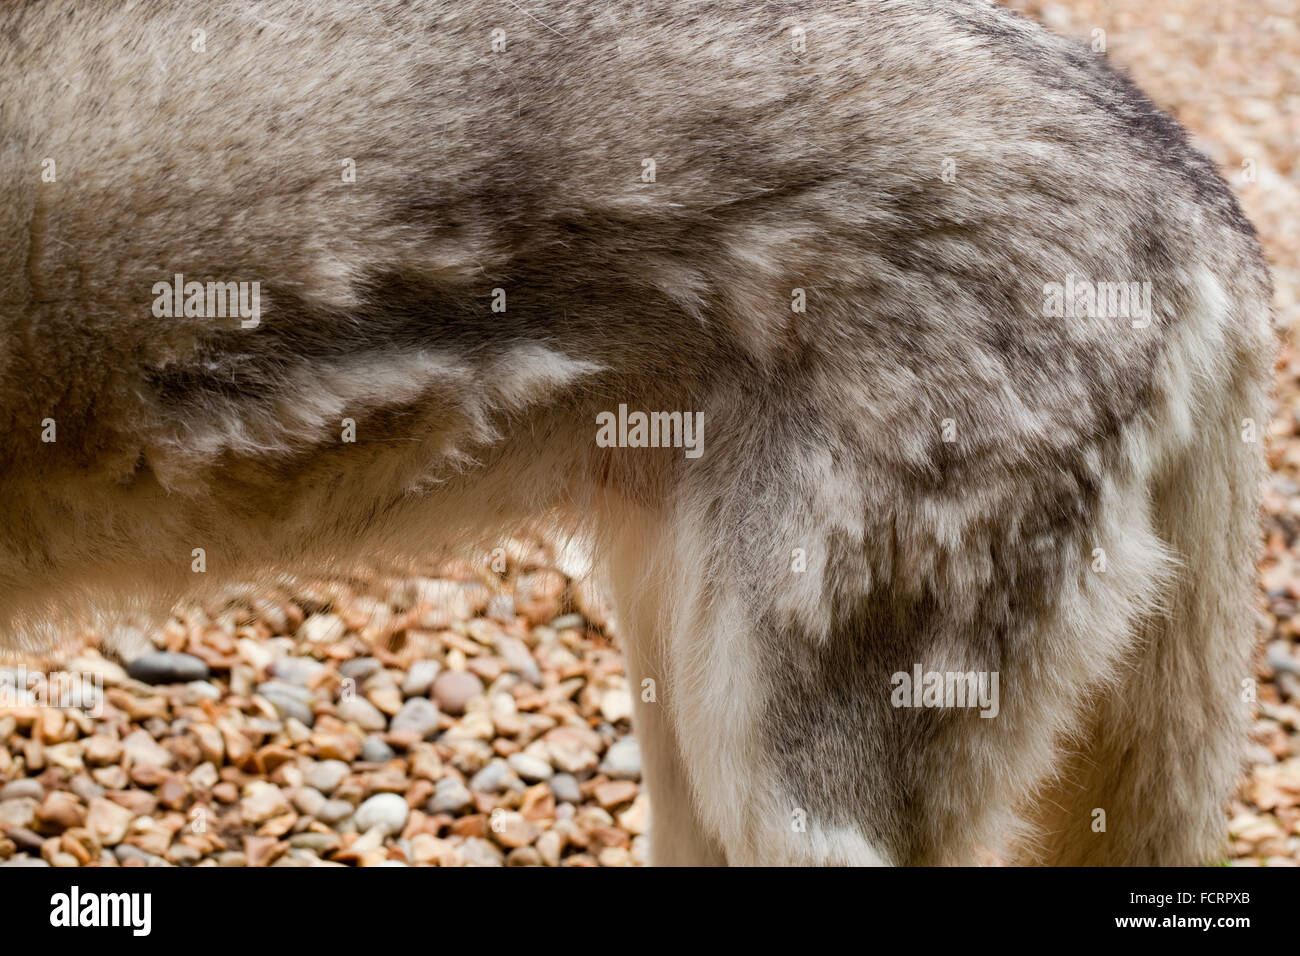 Siberian Husky. Hund. Canis Familiaris. Hinten linke Flanke, zeigt Haare Mauser Mantel. Dunklere Bereiche sind neue Fell Haare wachsen. Stockfoto